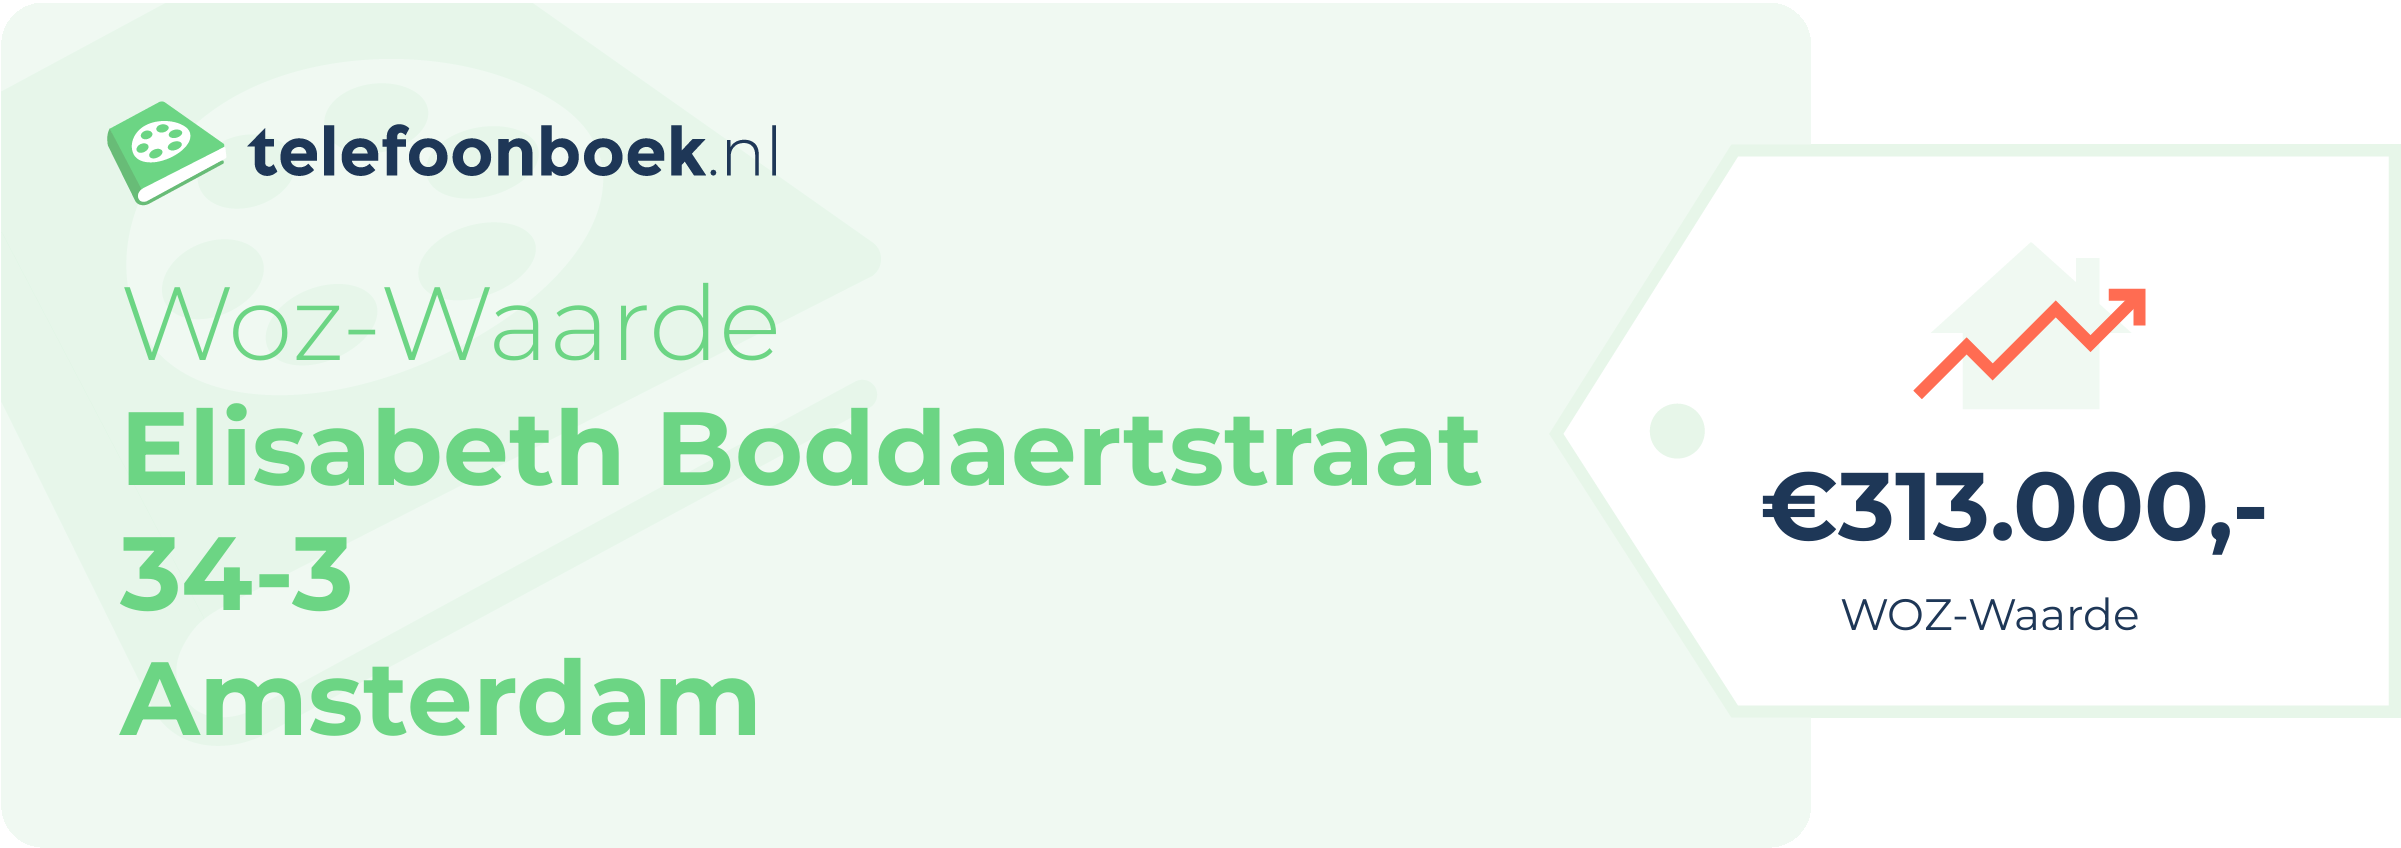 WOZ-waarde Elisabeth Boddaertstraat 34-3 Amsterdam